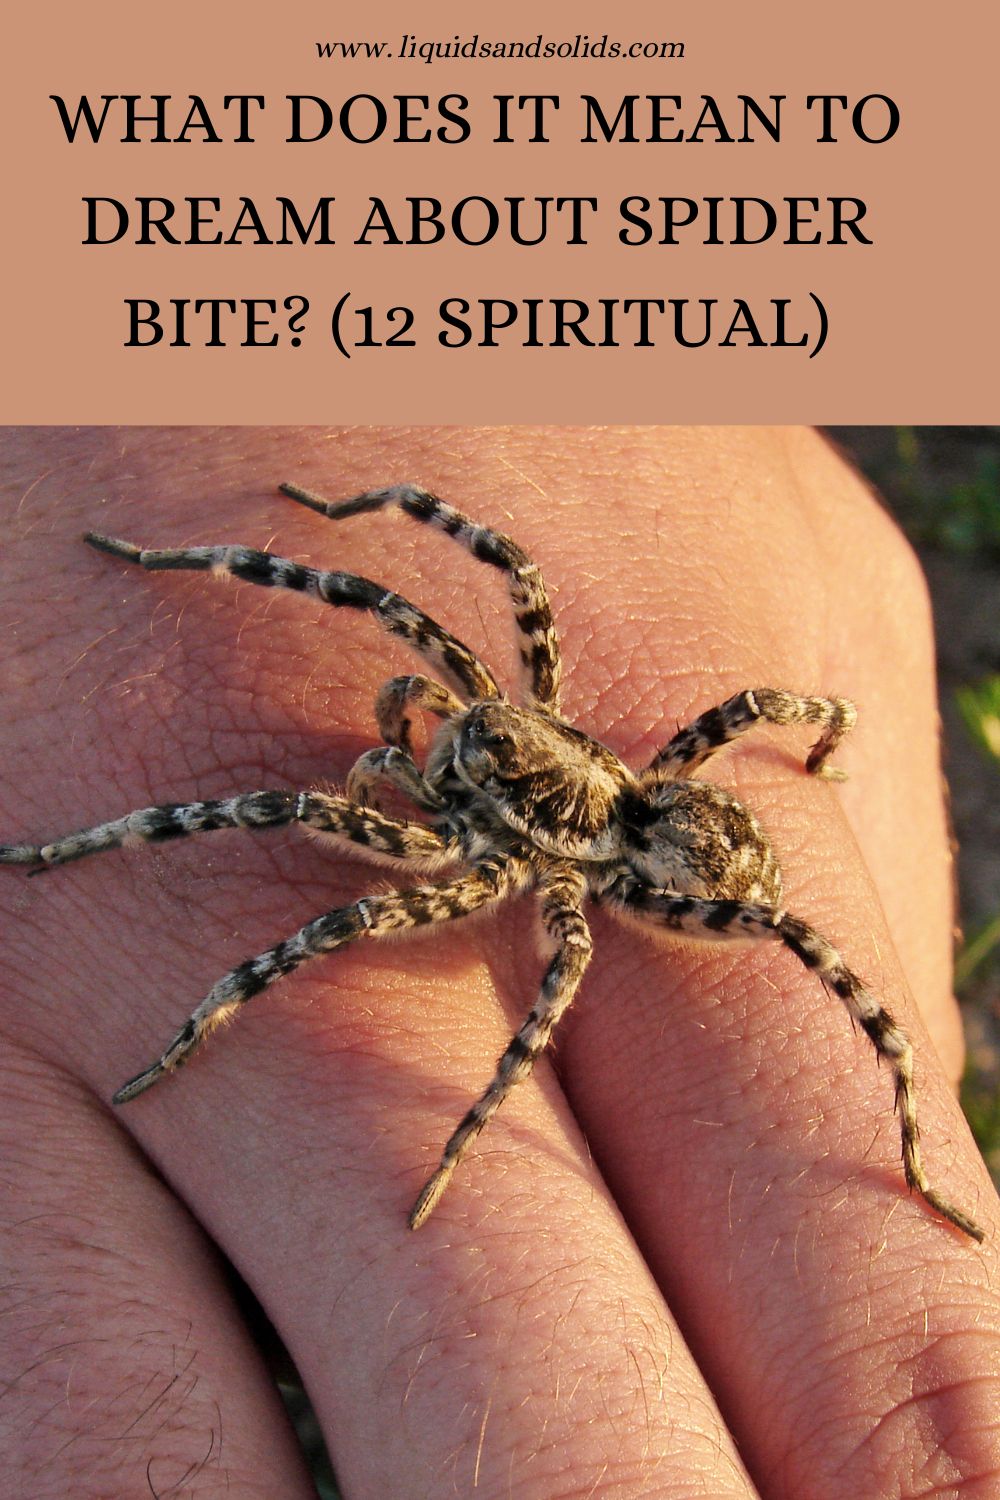 What Dreams Of Spider Bite Symbolize